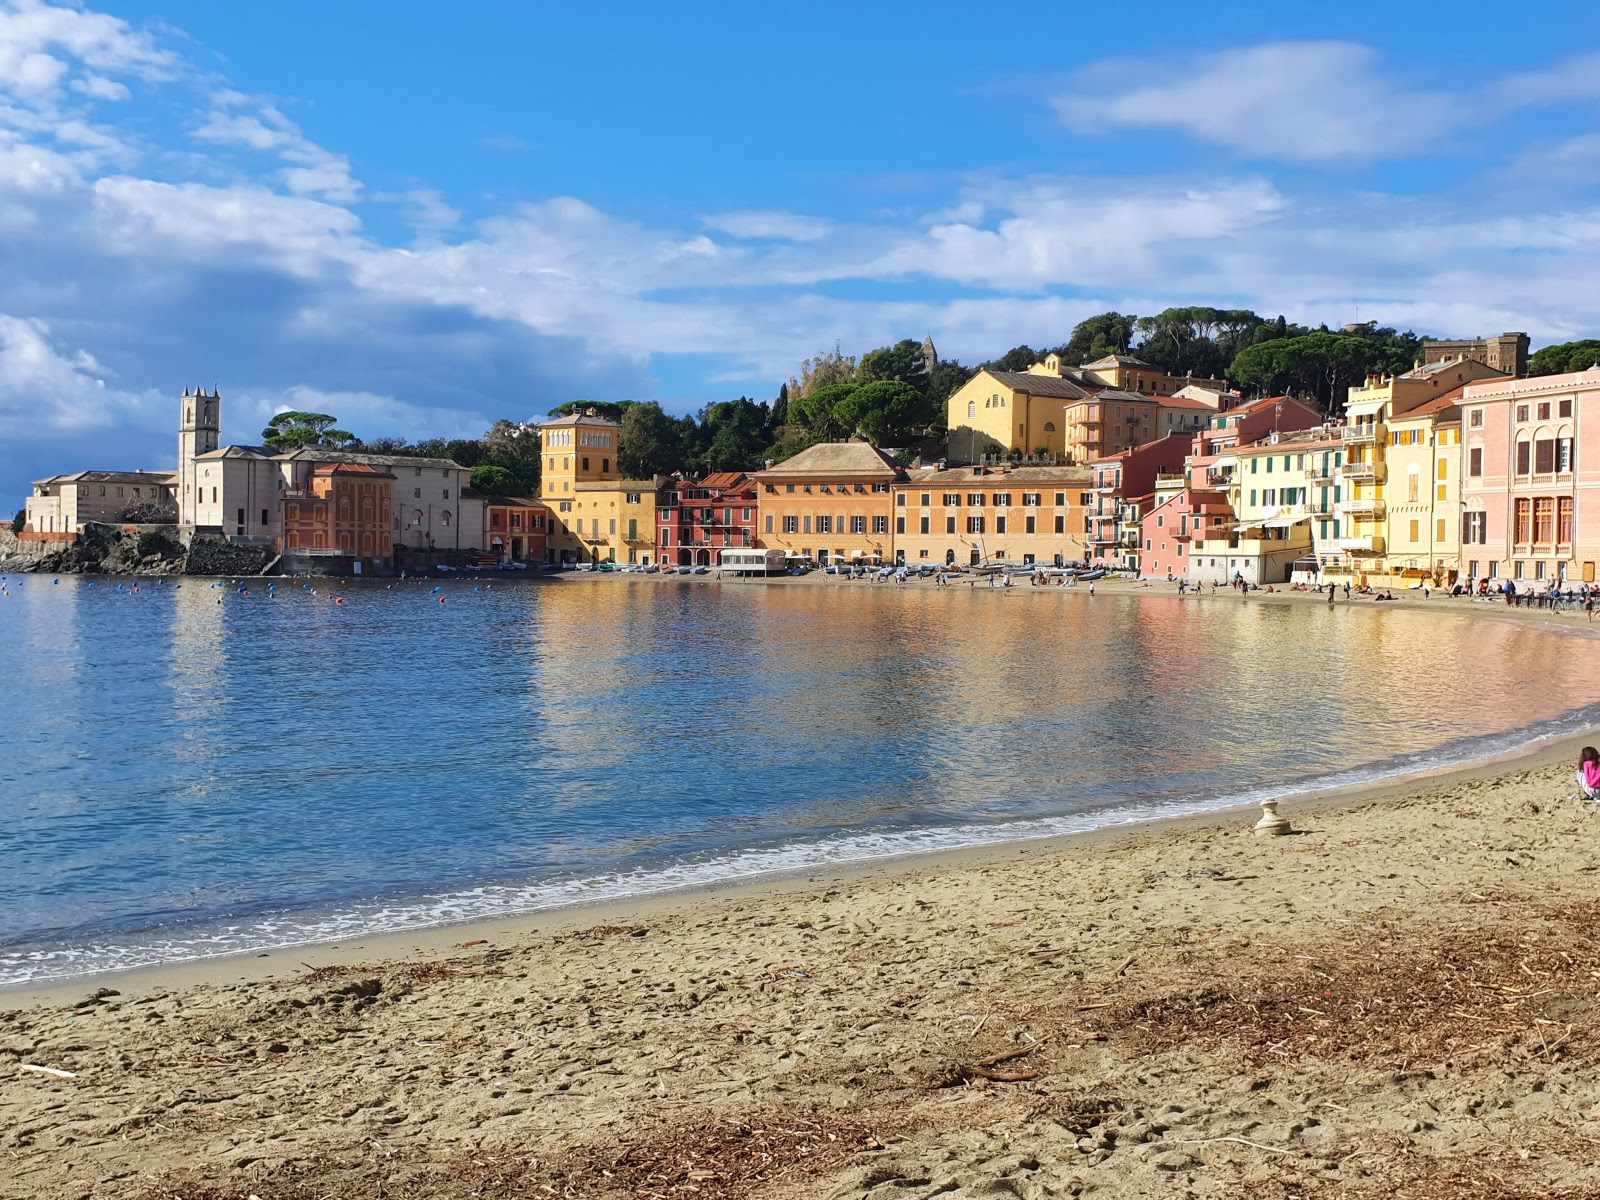 Spiaggia Baia del Silenzio'in fotoğrafı ve güzel manzarası